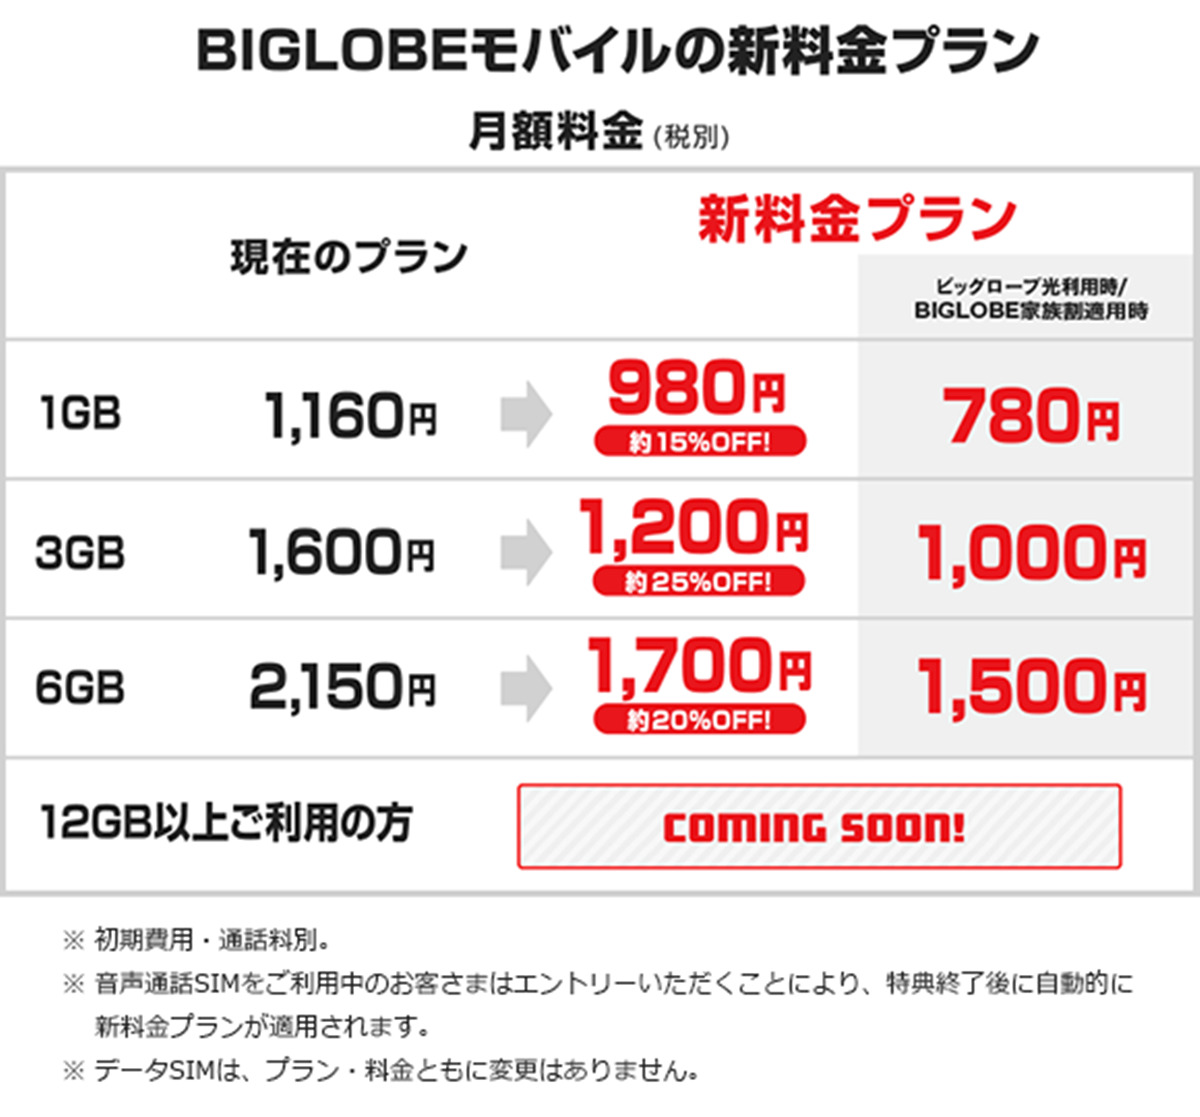 biglobe-mobile-new-plan